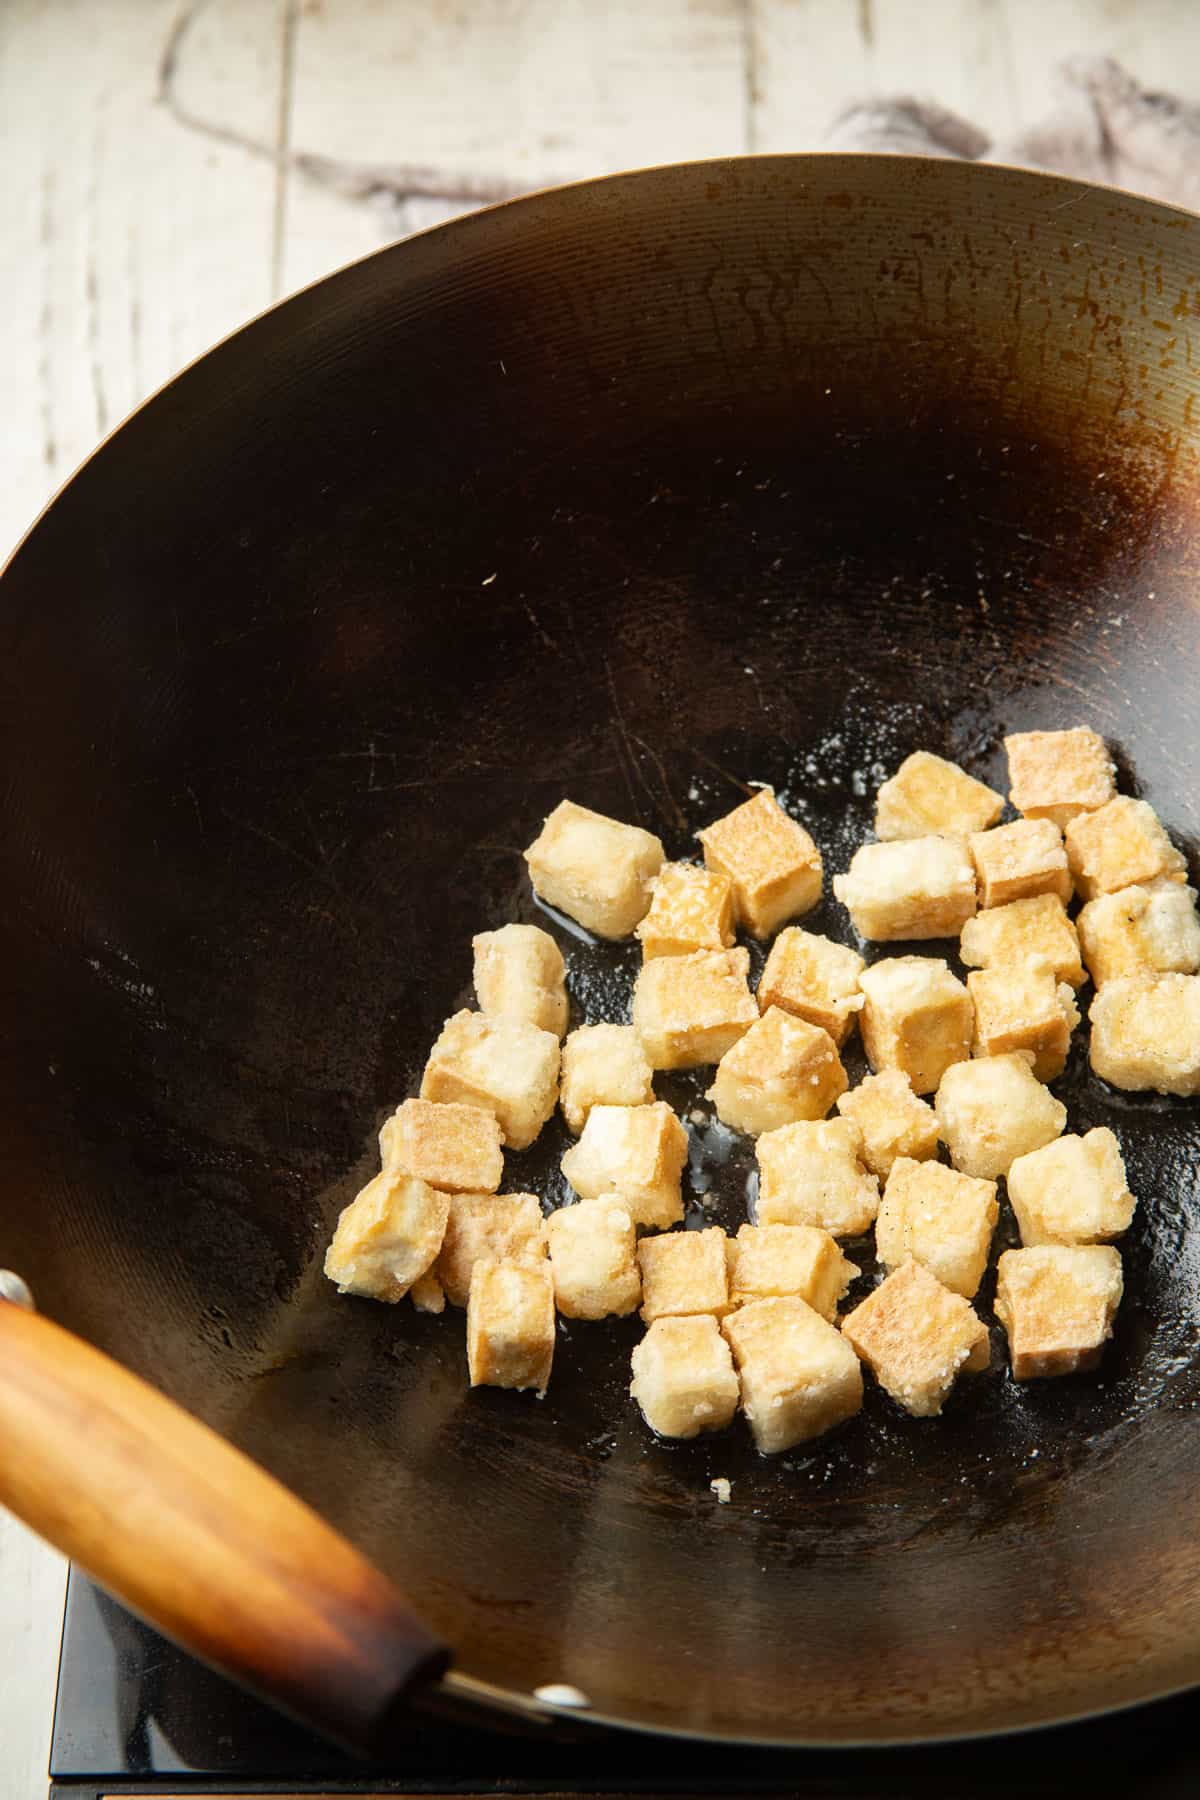 Fried tofu cubes in a wok.